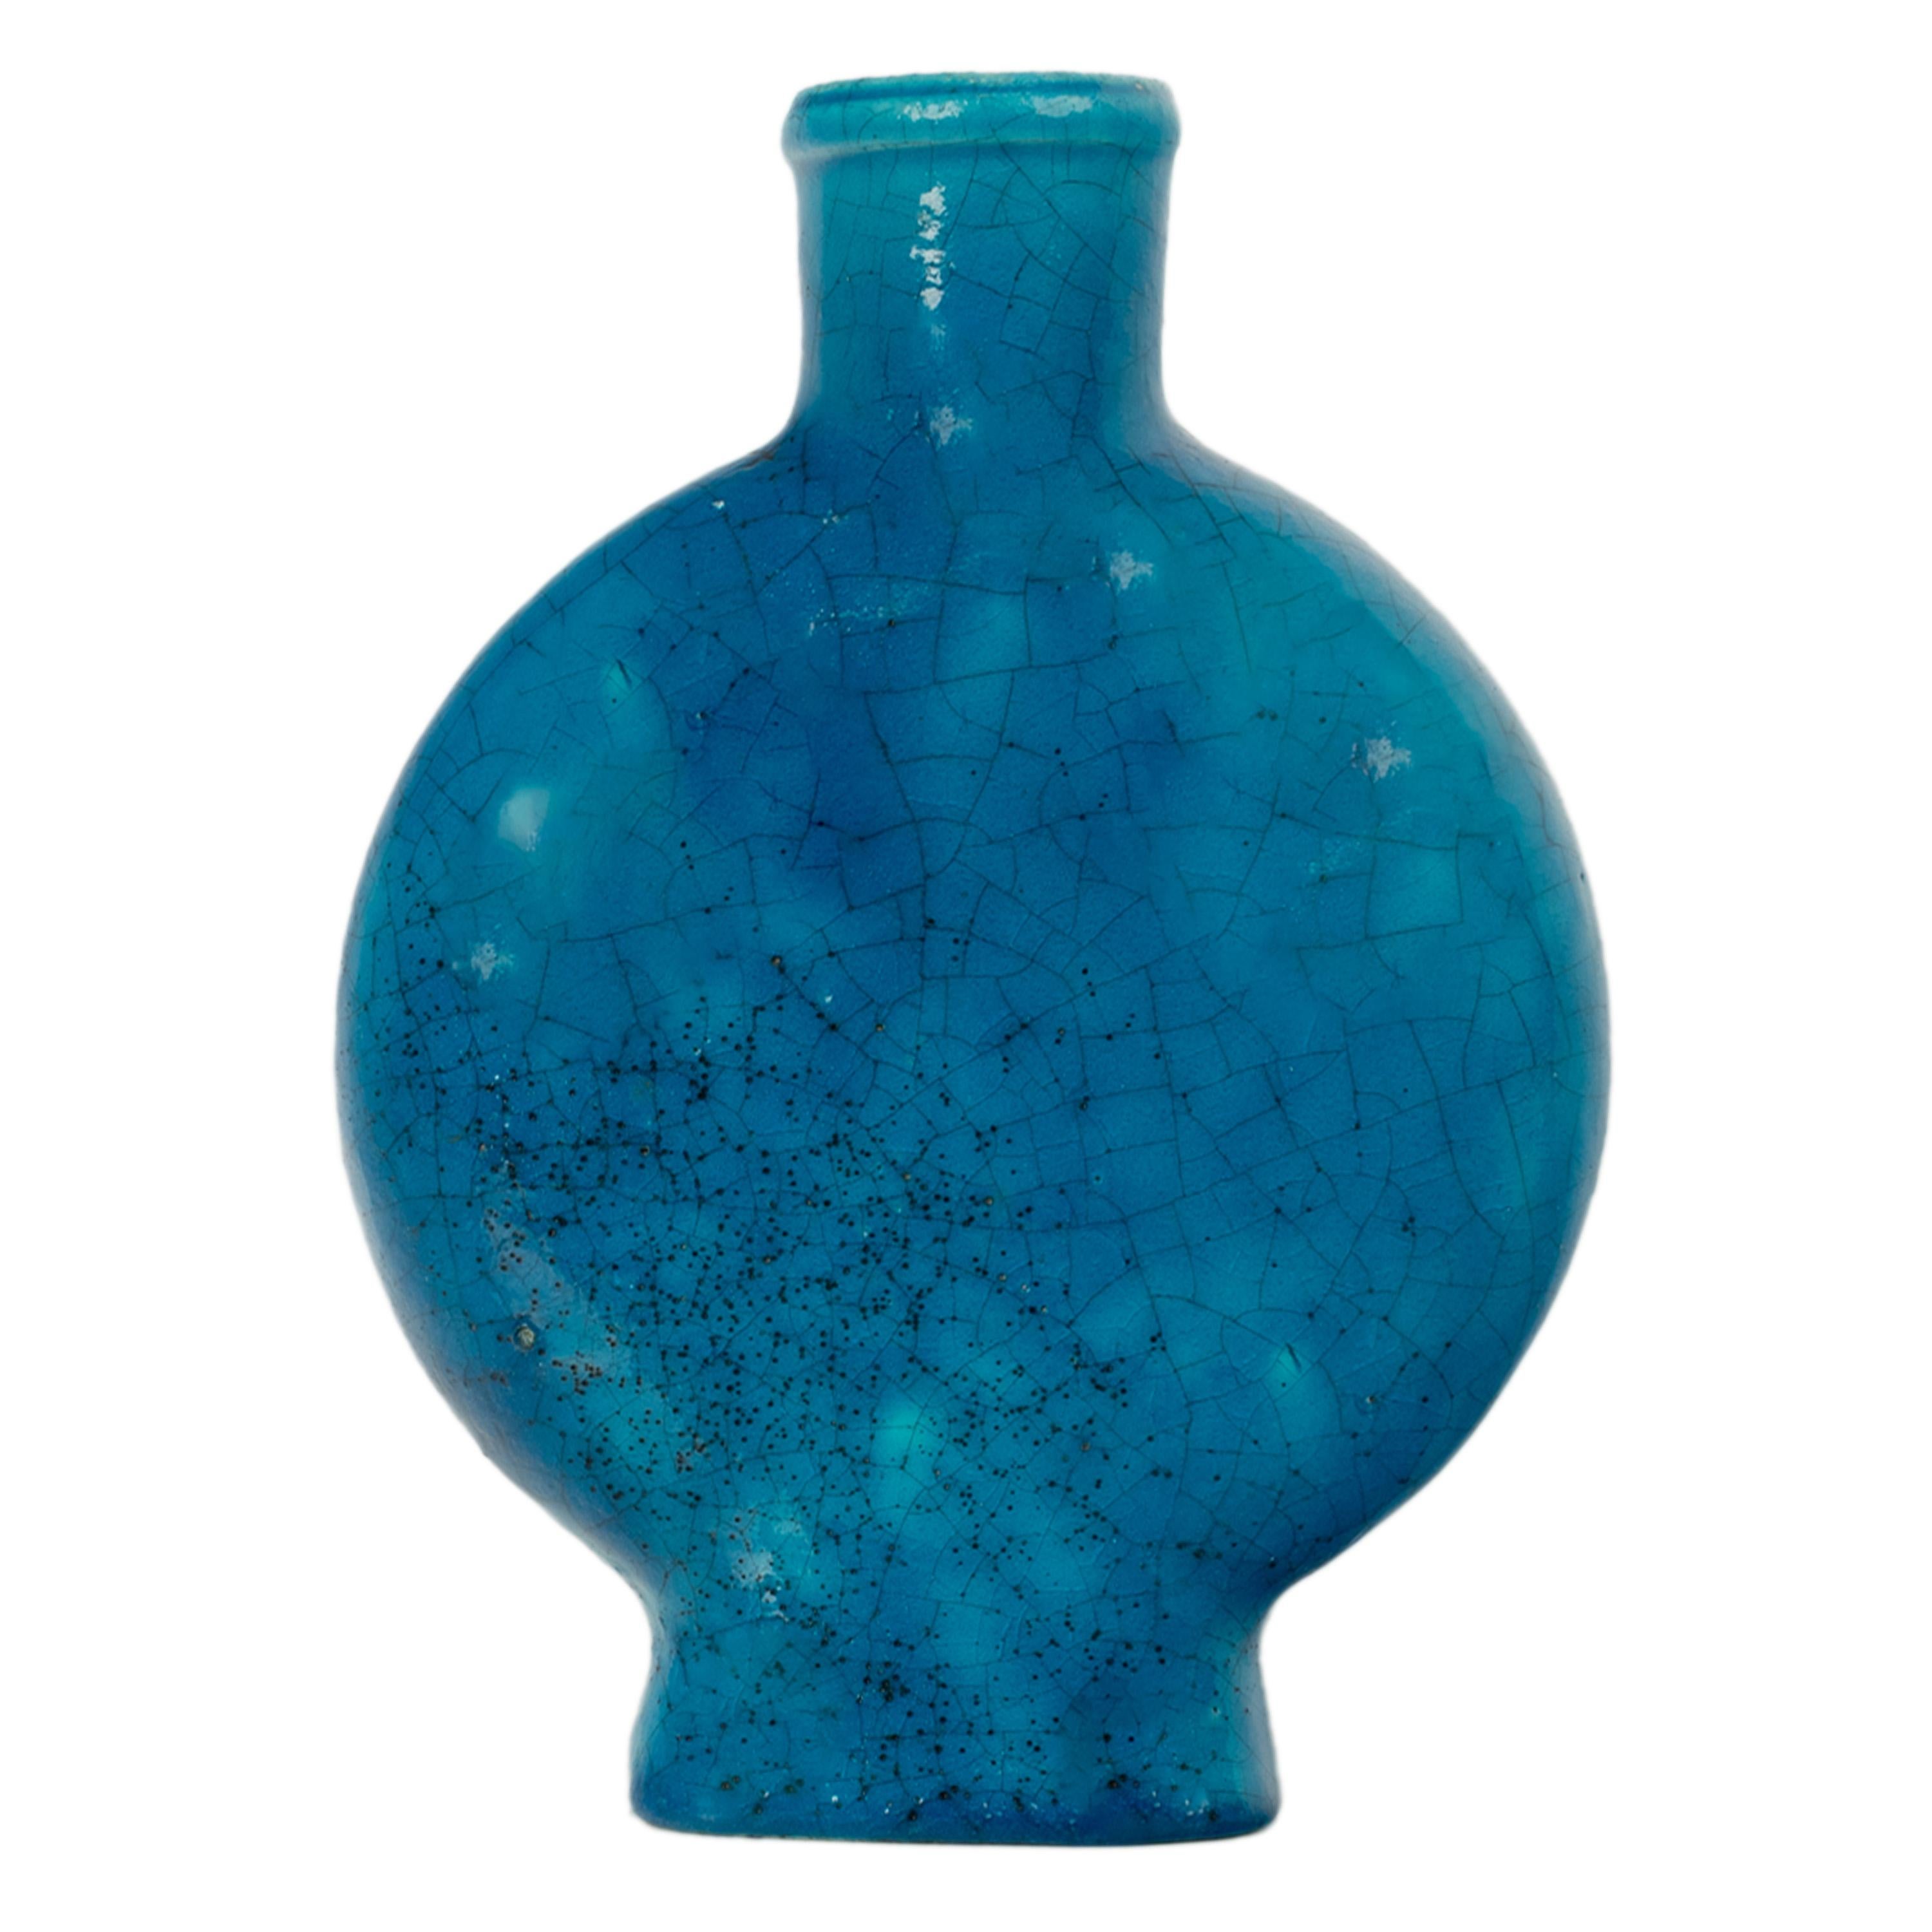 Antique French Art Deco Turquoise Blue Pottery Vase Edmond Lachenal Signed 1930 For Sale 5